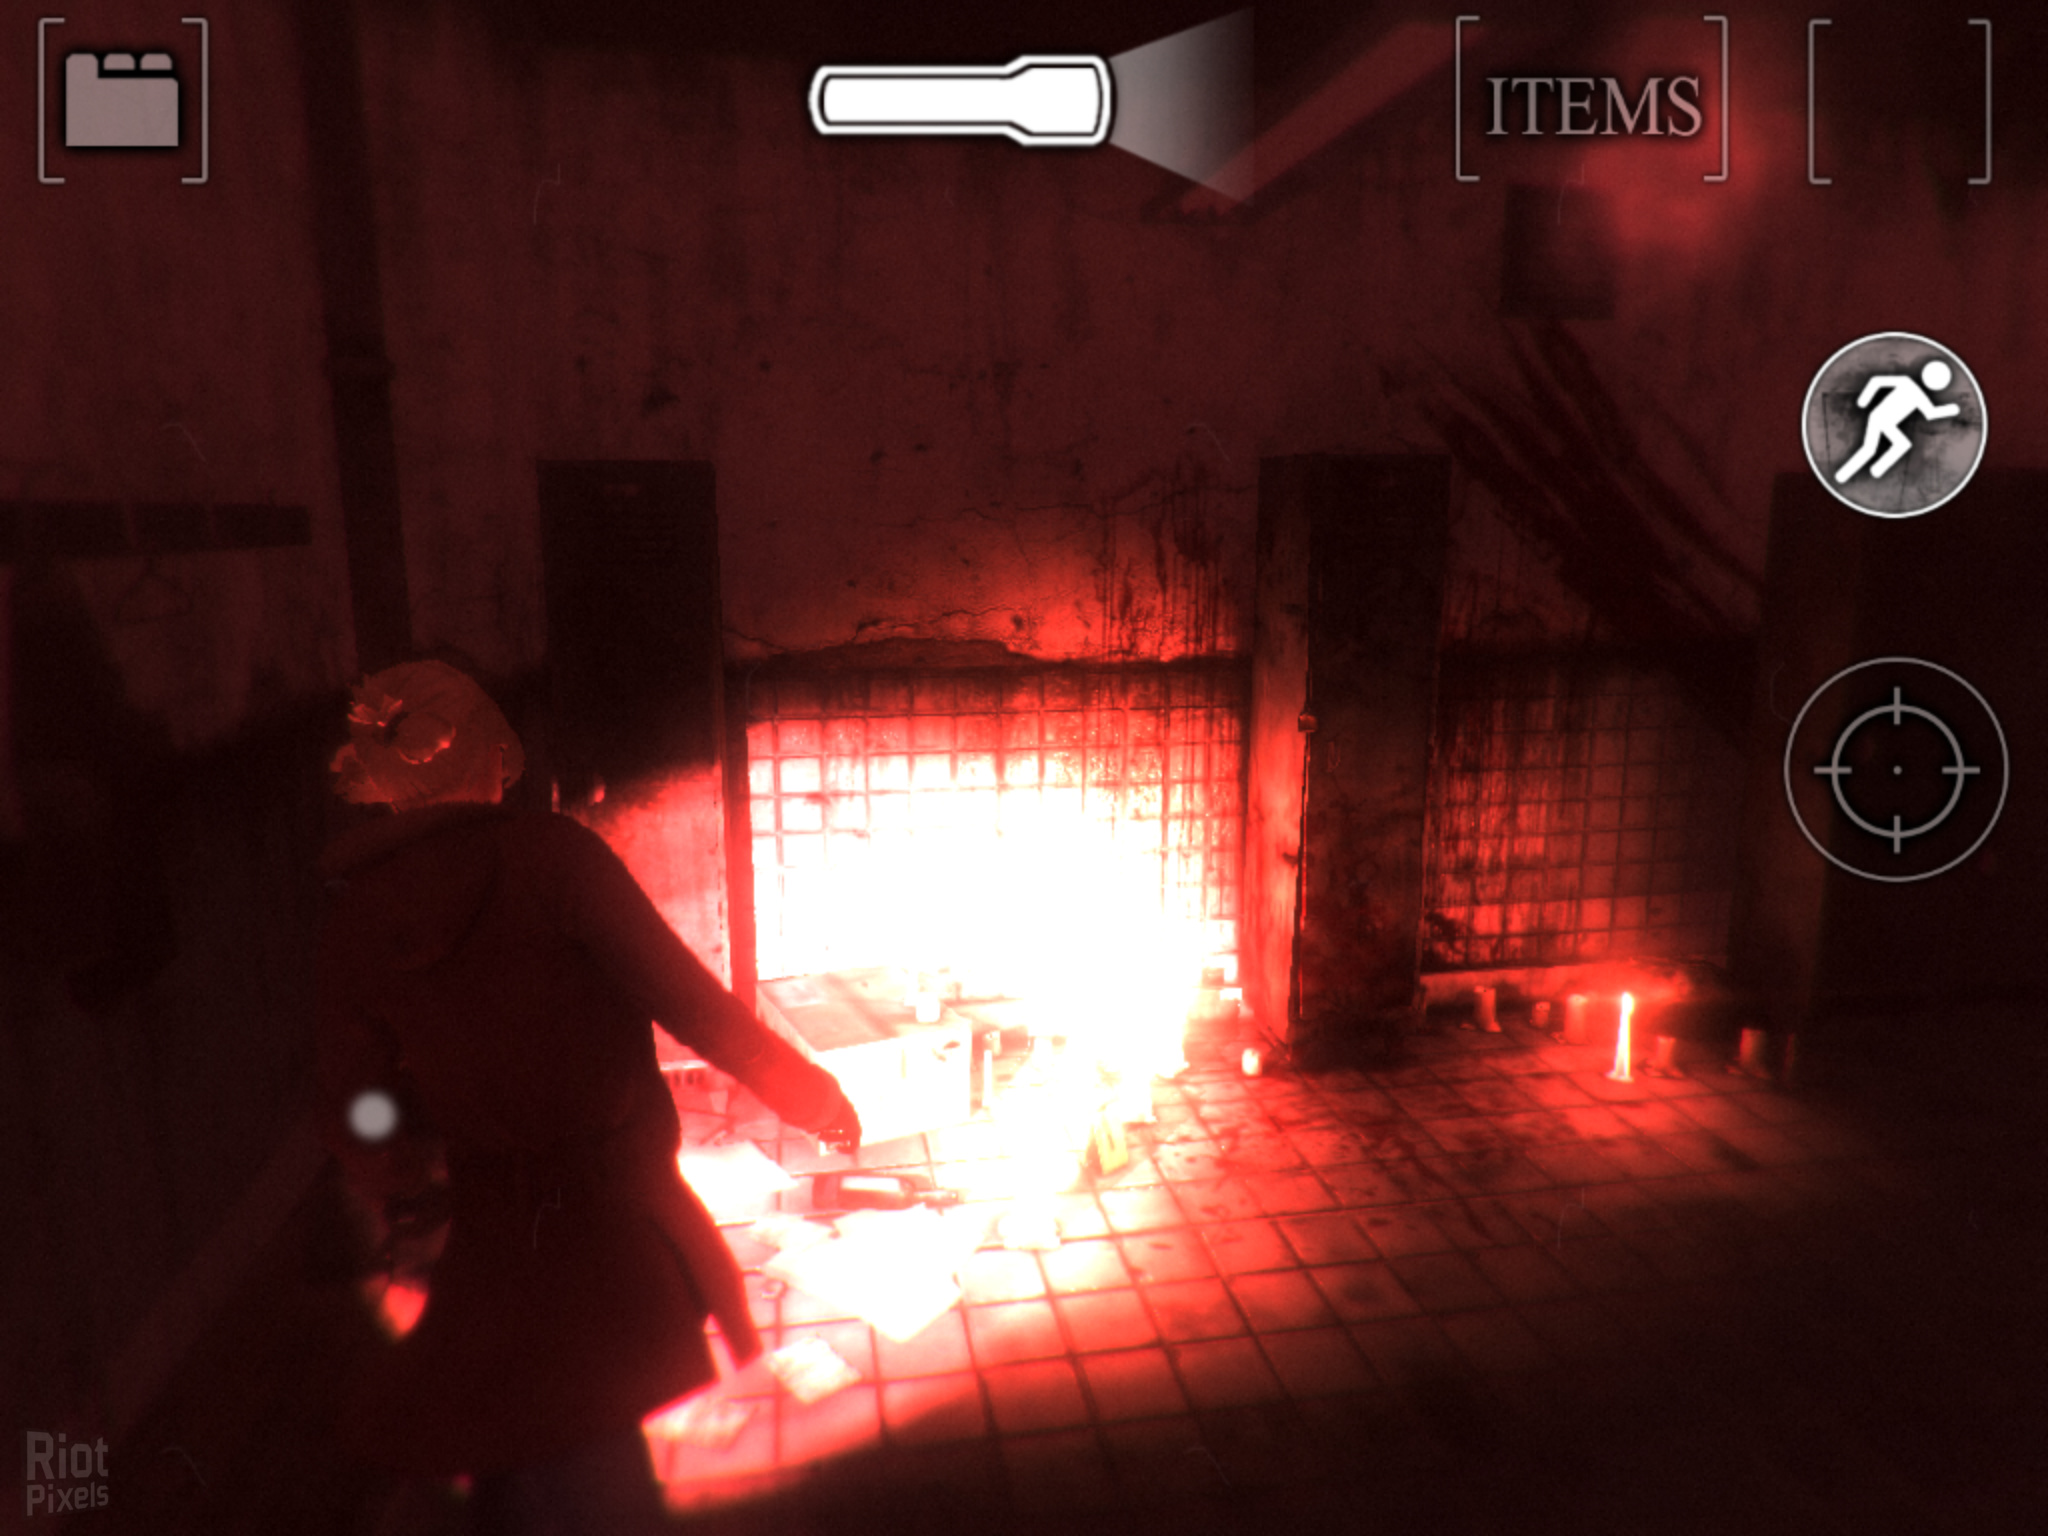 Forgotten Memories: Alternate Realities - game screenshots at Riot Pixels,  images